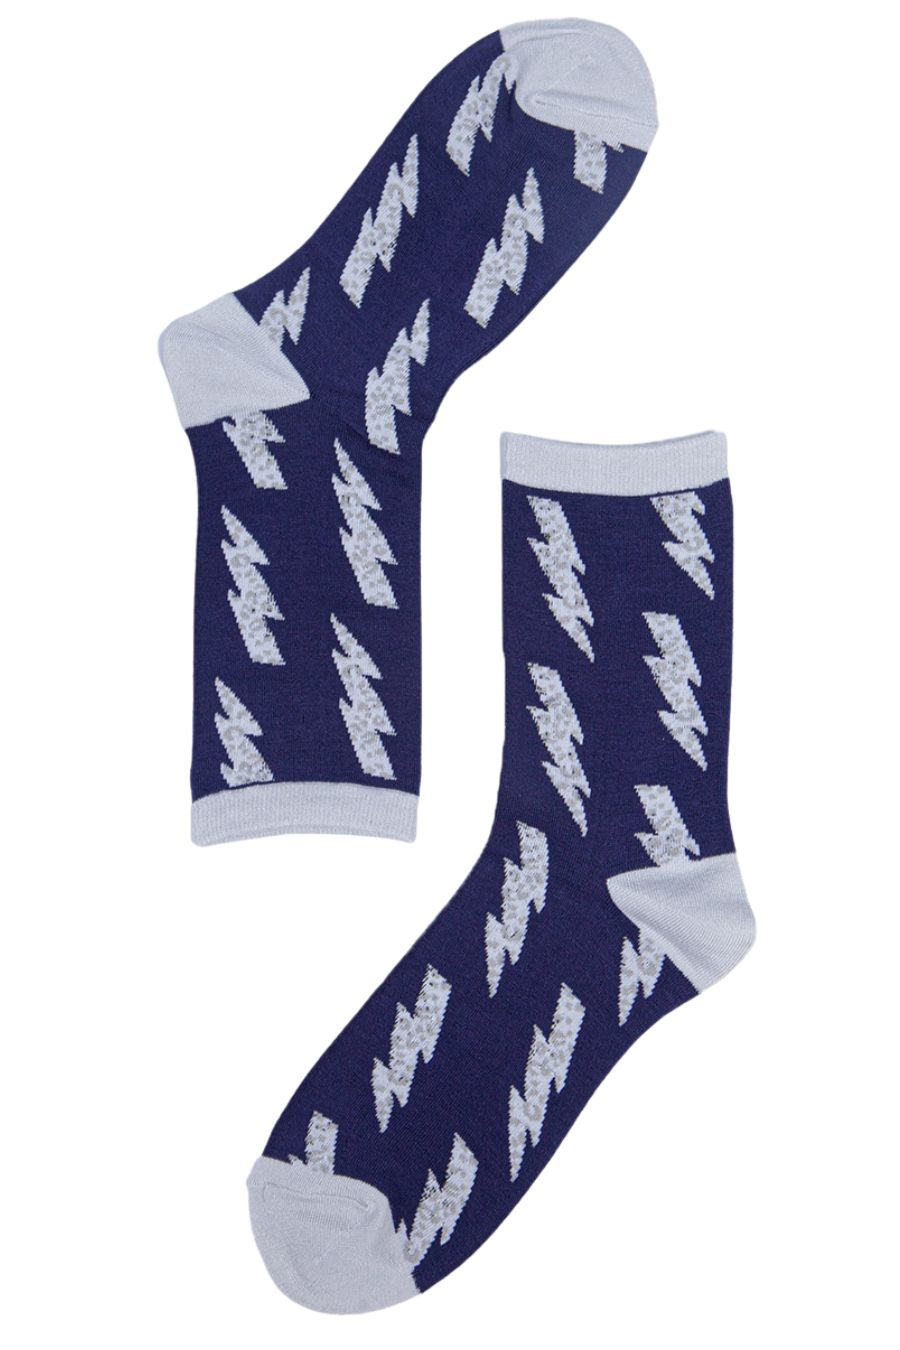 navy blue socks with grey leopard print thunder bolts